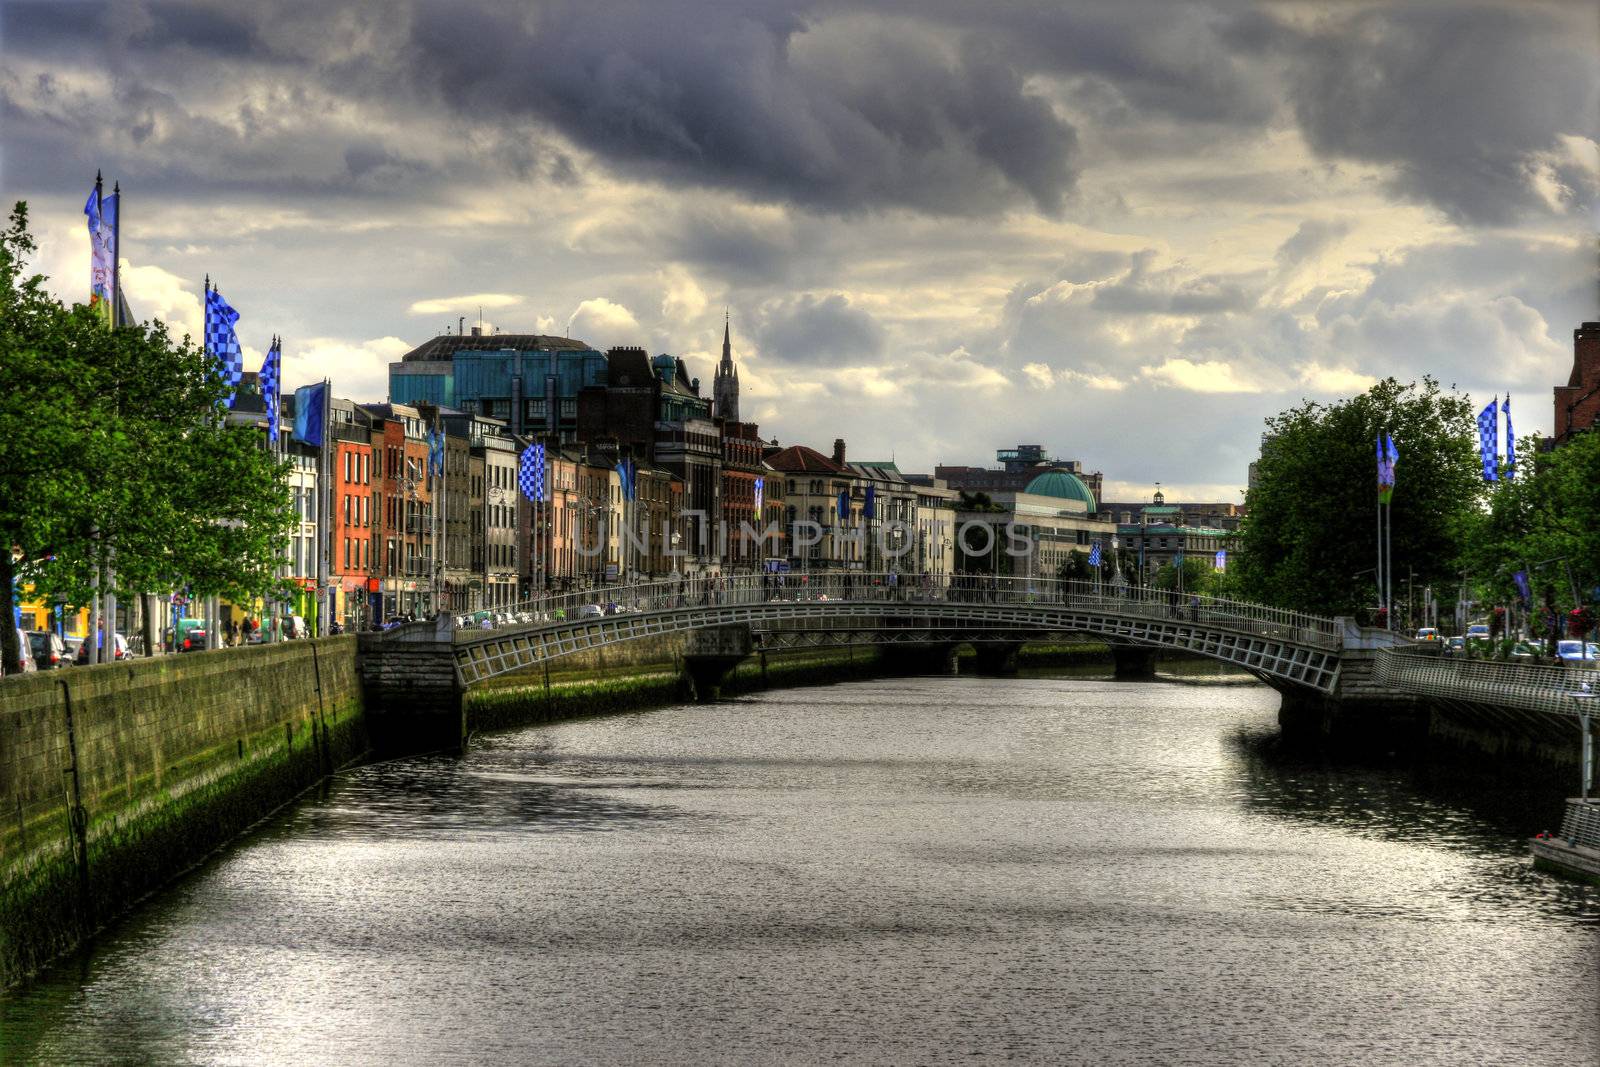 River Liffey in Dublin city, Ireland by cristiaciobanu